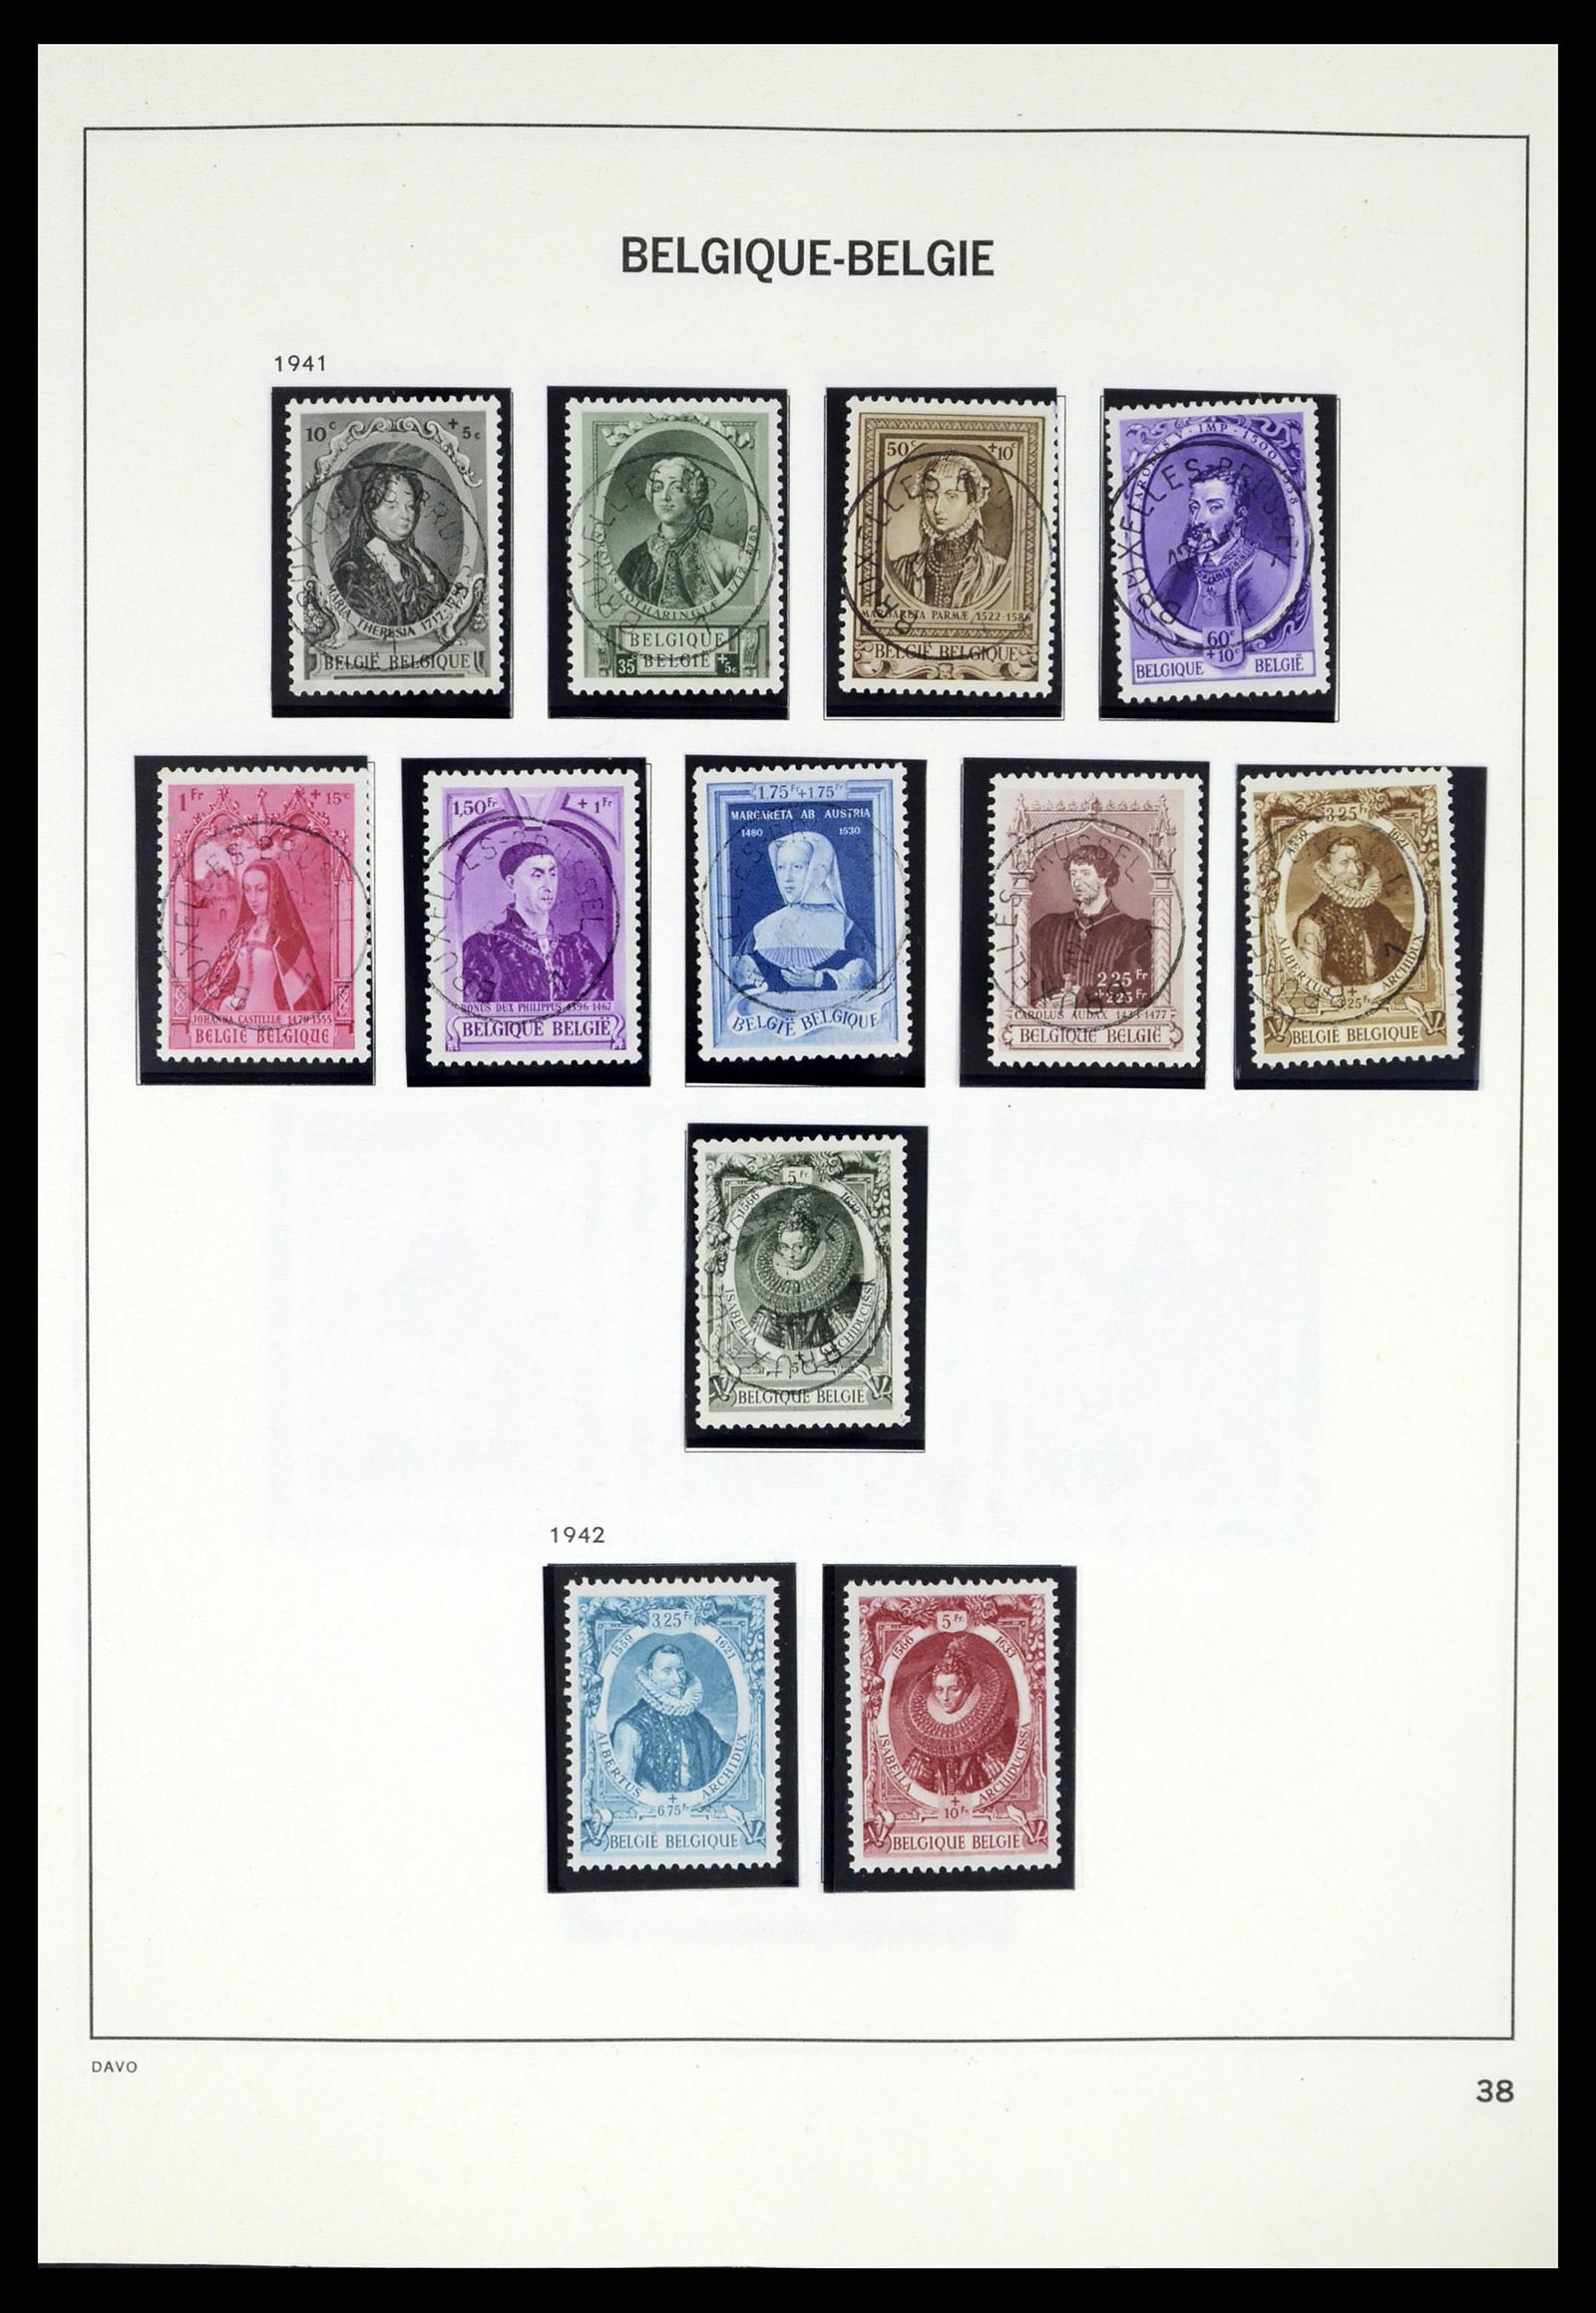 37367 036 - Stamp collection 37367 Belgium 1849-2003.